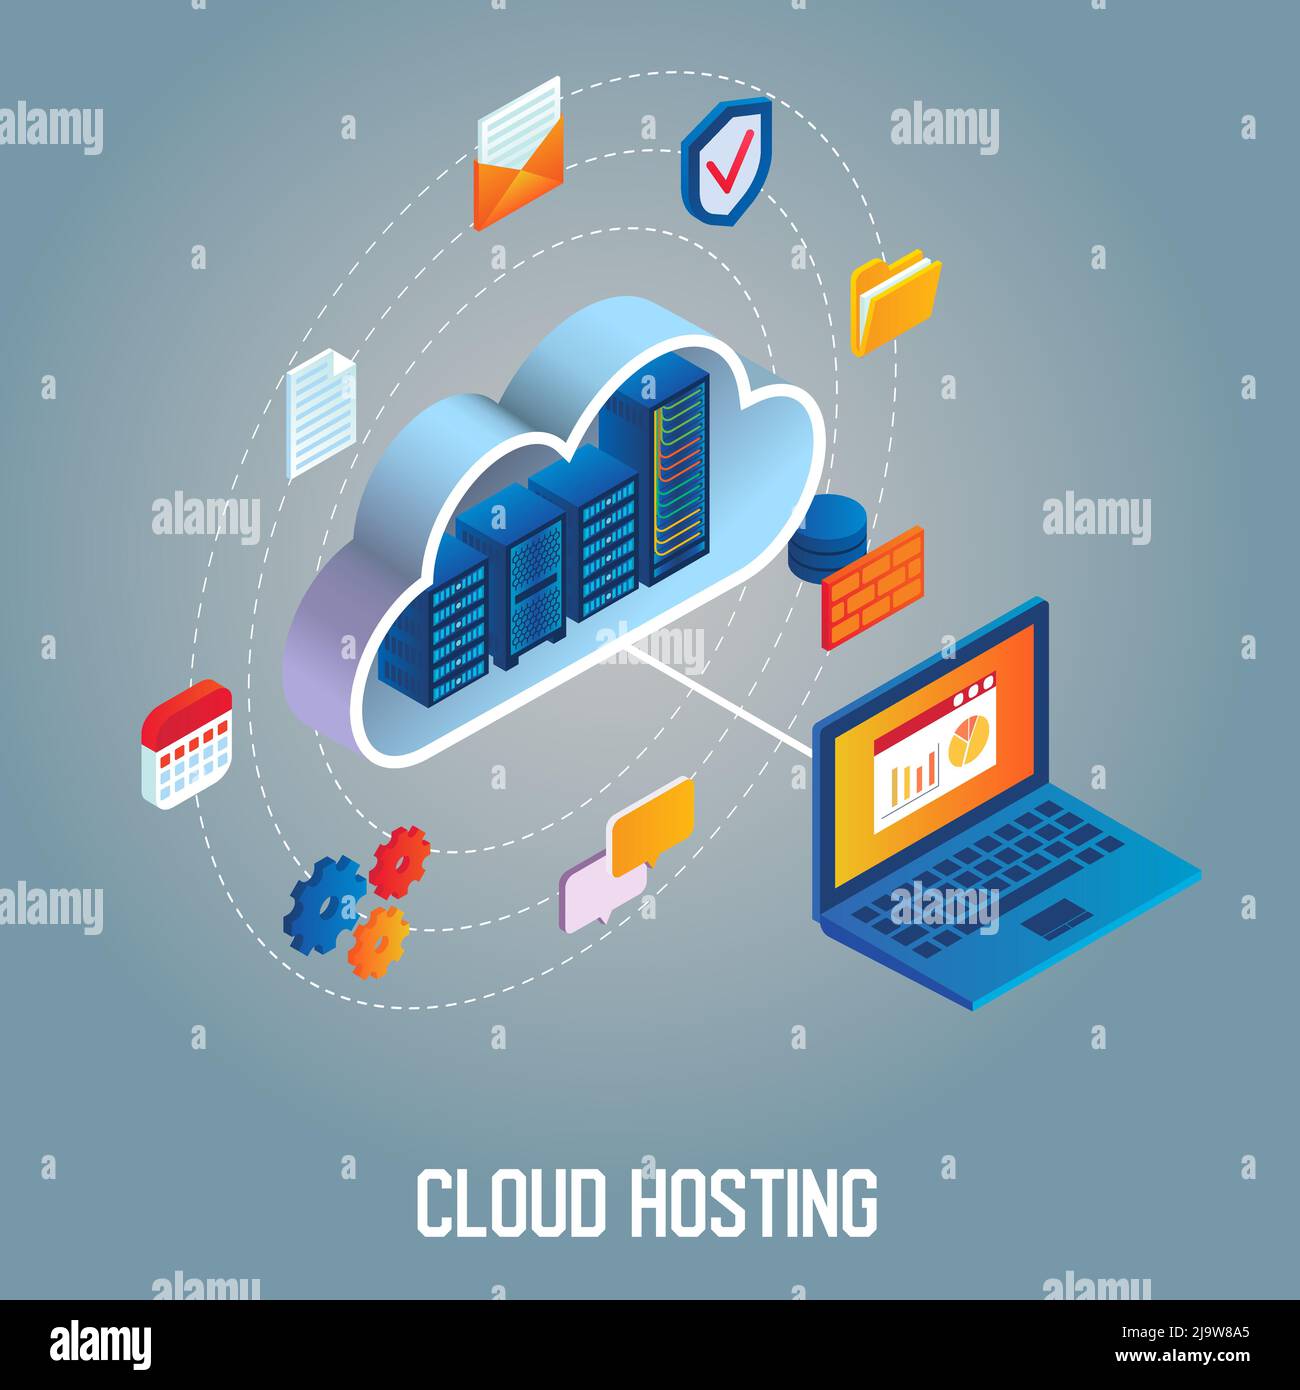 Cloud hosting vector isometric illustration Stock Vector